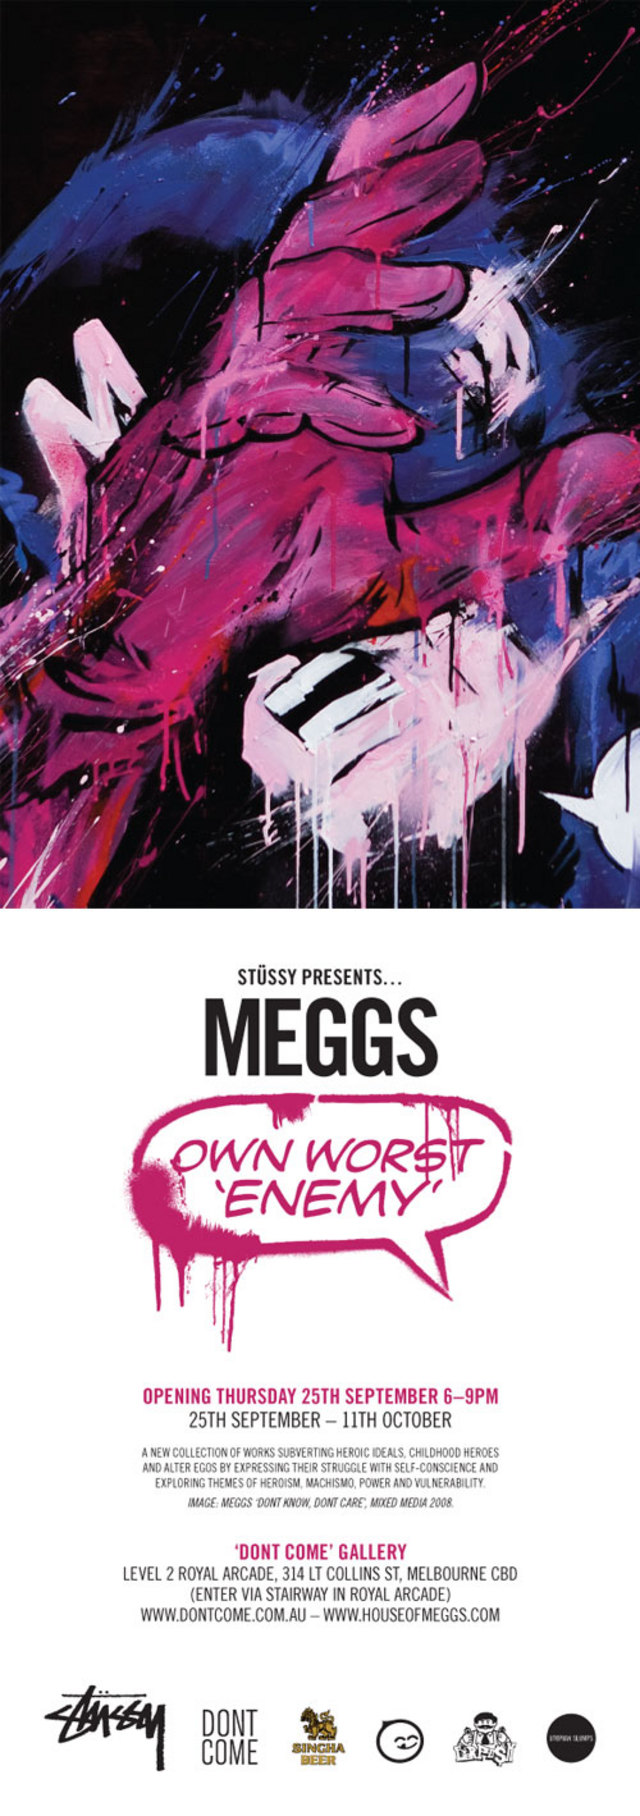 Meggs - Own Worst Enemy